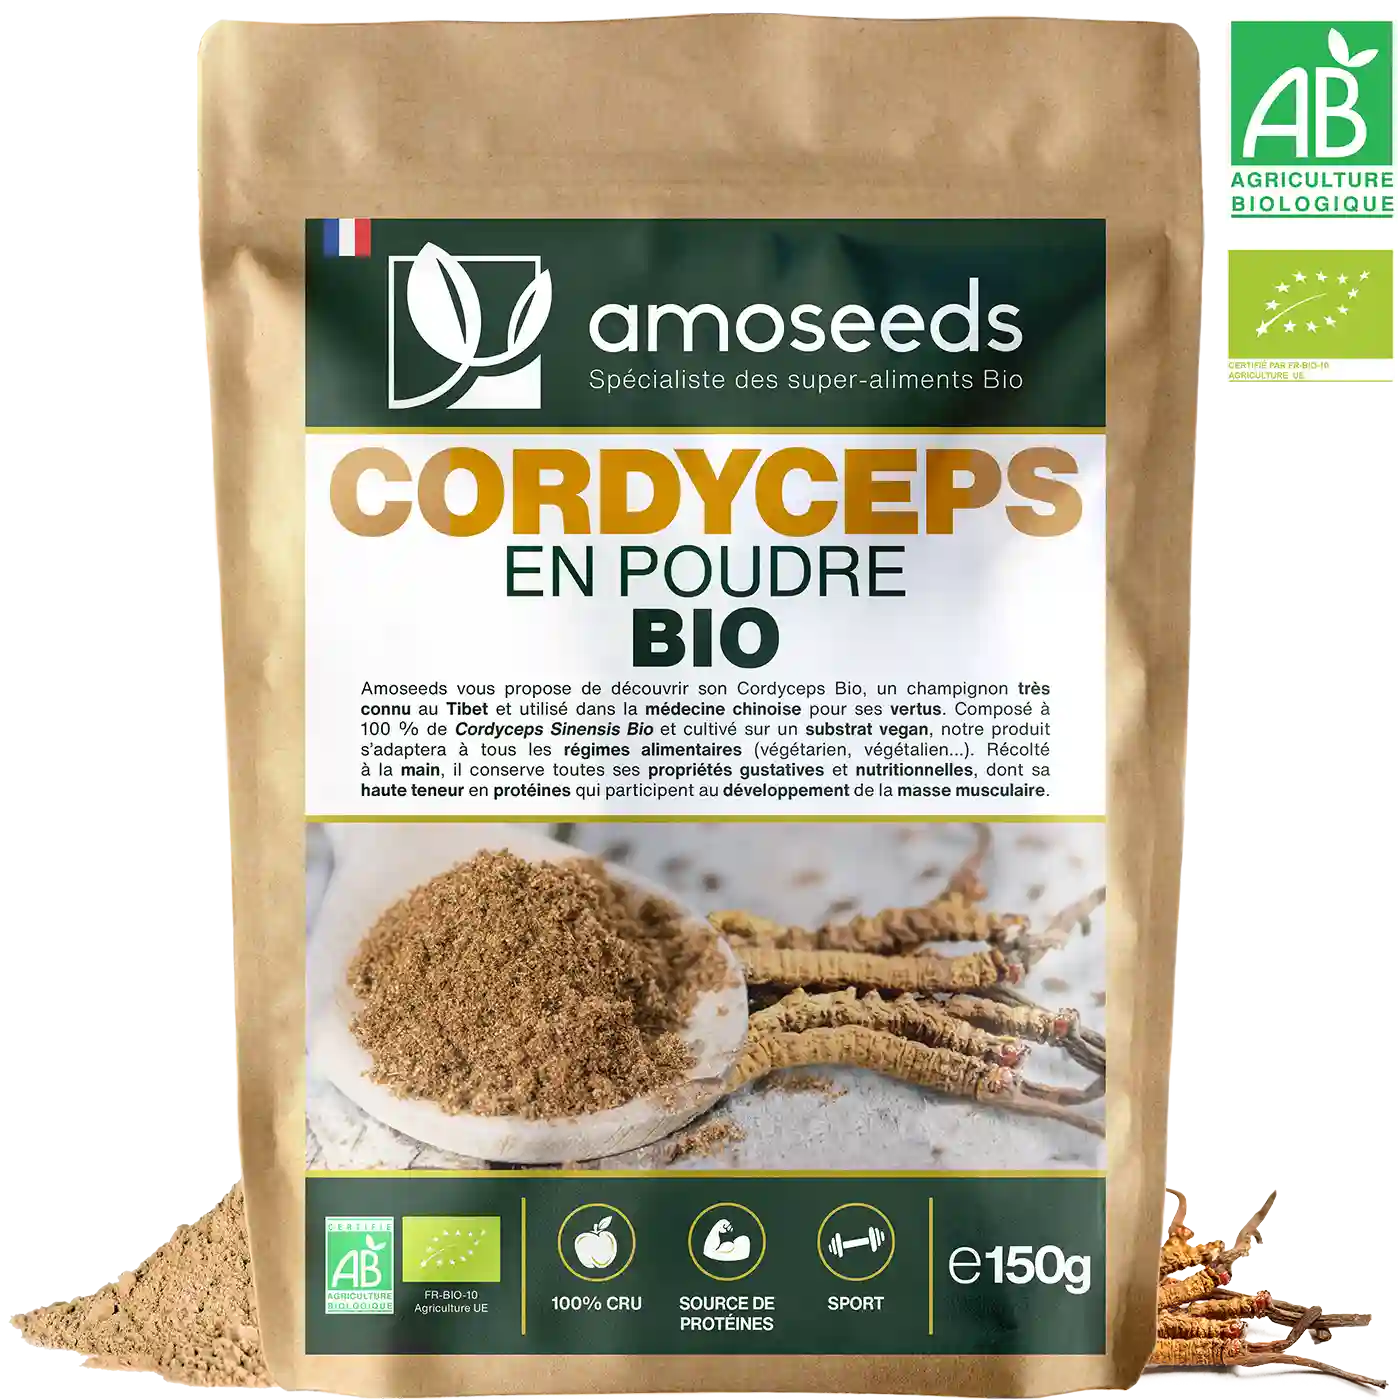 Graines de Fenugrec Bio 500g - AMOSEEDS 